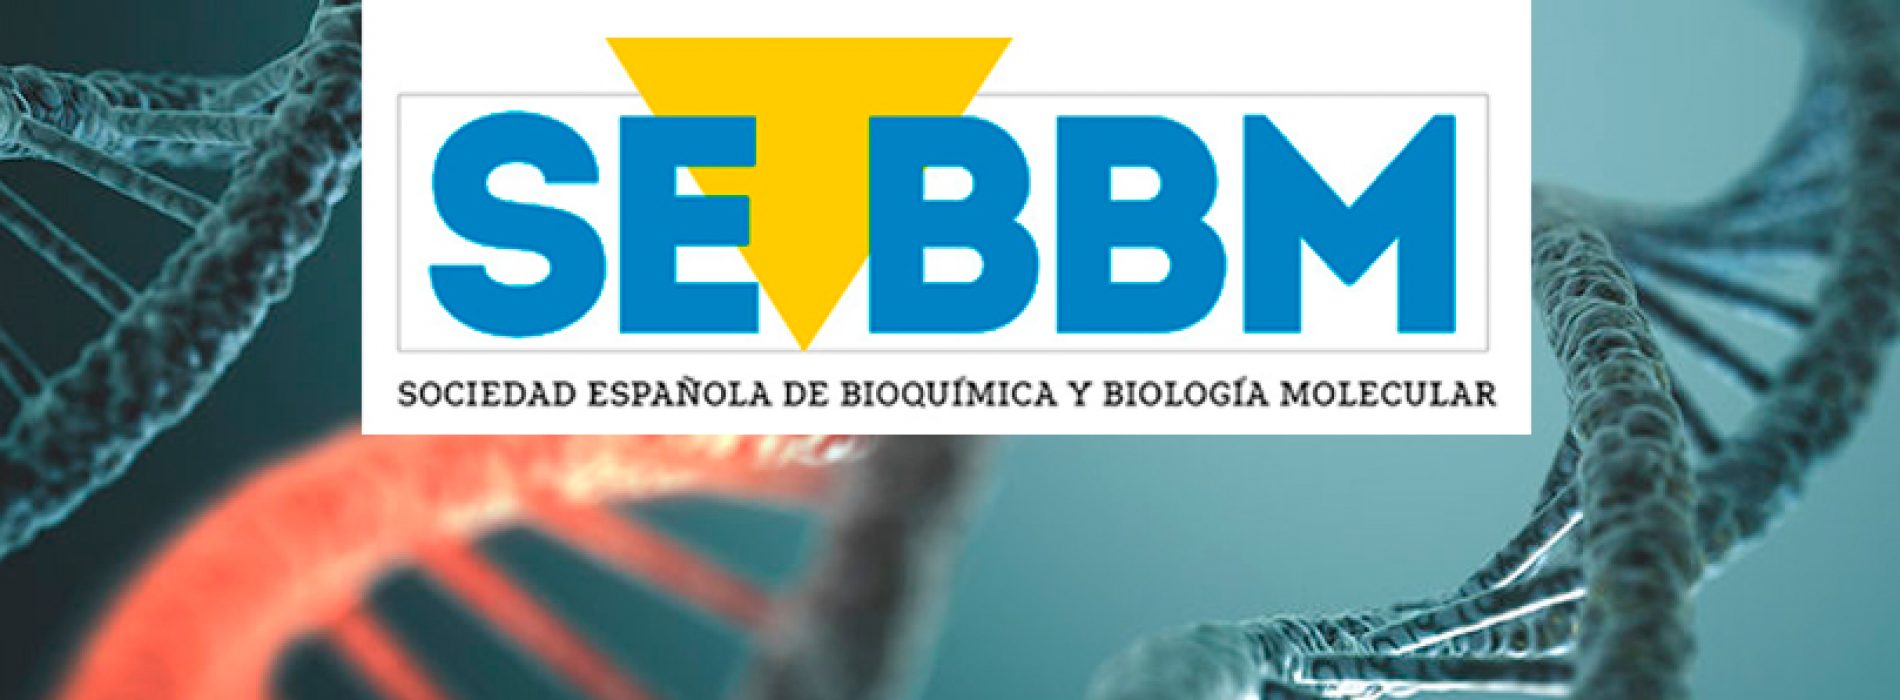 Journal of the Spanish society of Biochemistry and Molecular Biology | SEEBM